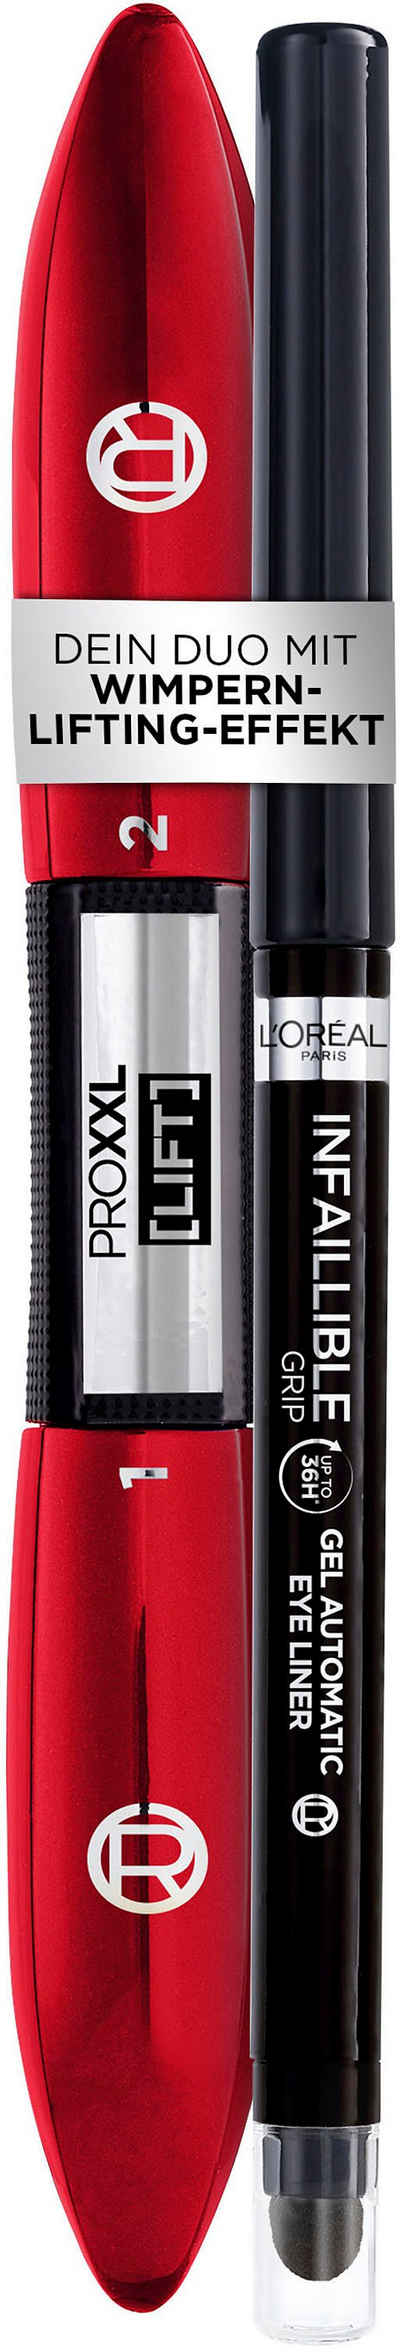 L'ORÉAL PARIS Schmink-Set L'Oréal Paris Intensive Blicke: Mascara + Liner, 2-tlg., Make-Up-Set, Mascara, Liner, Wimperntusche, schwunggebend